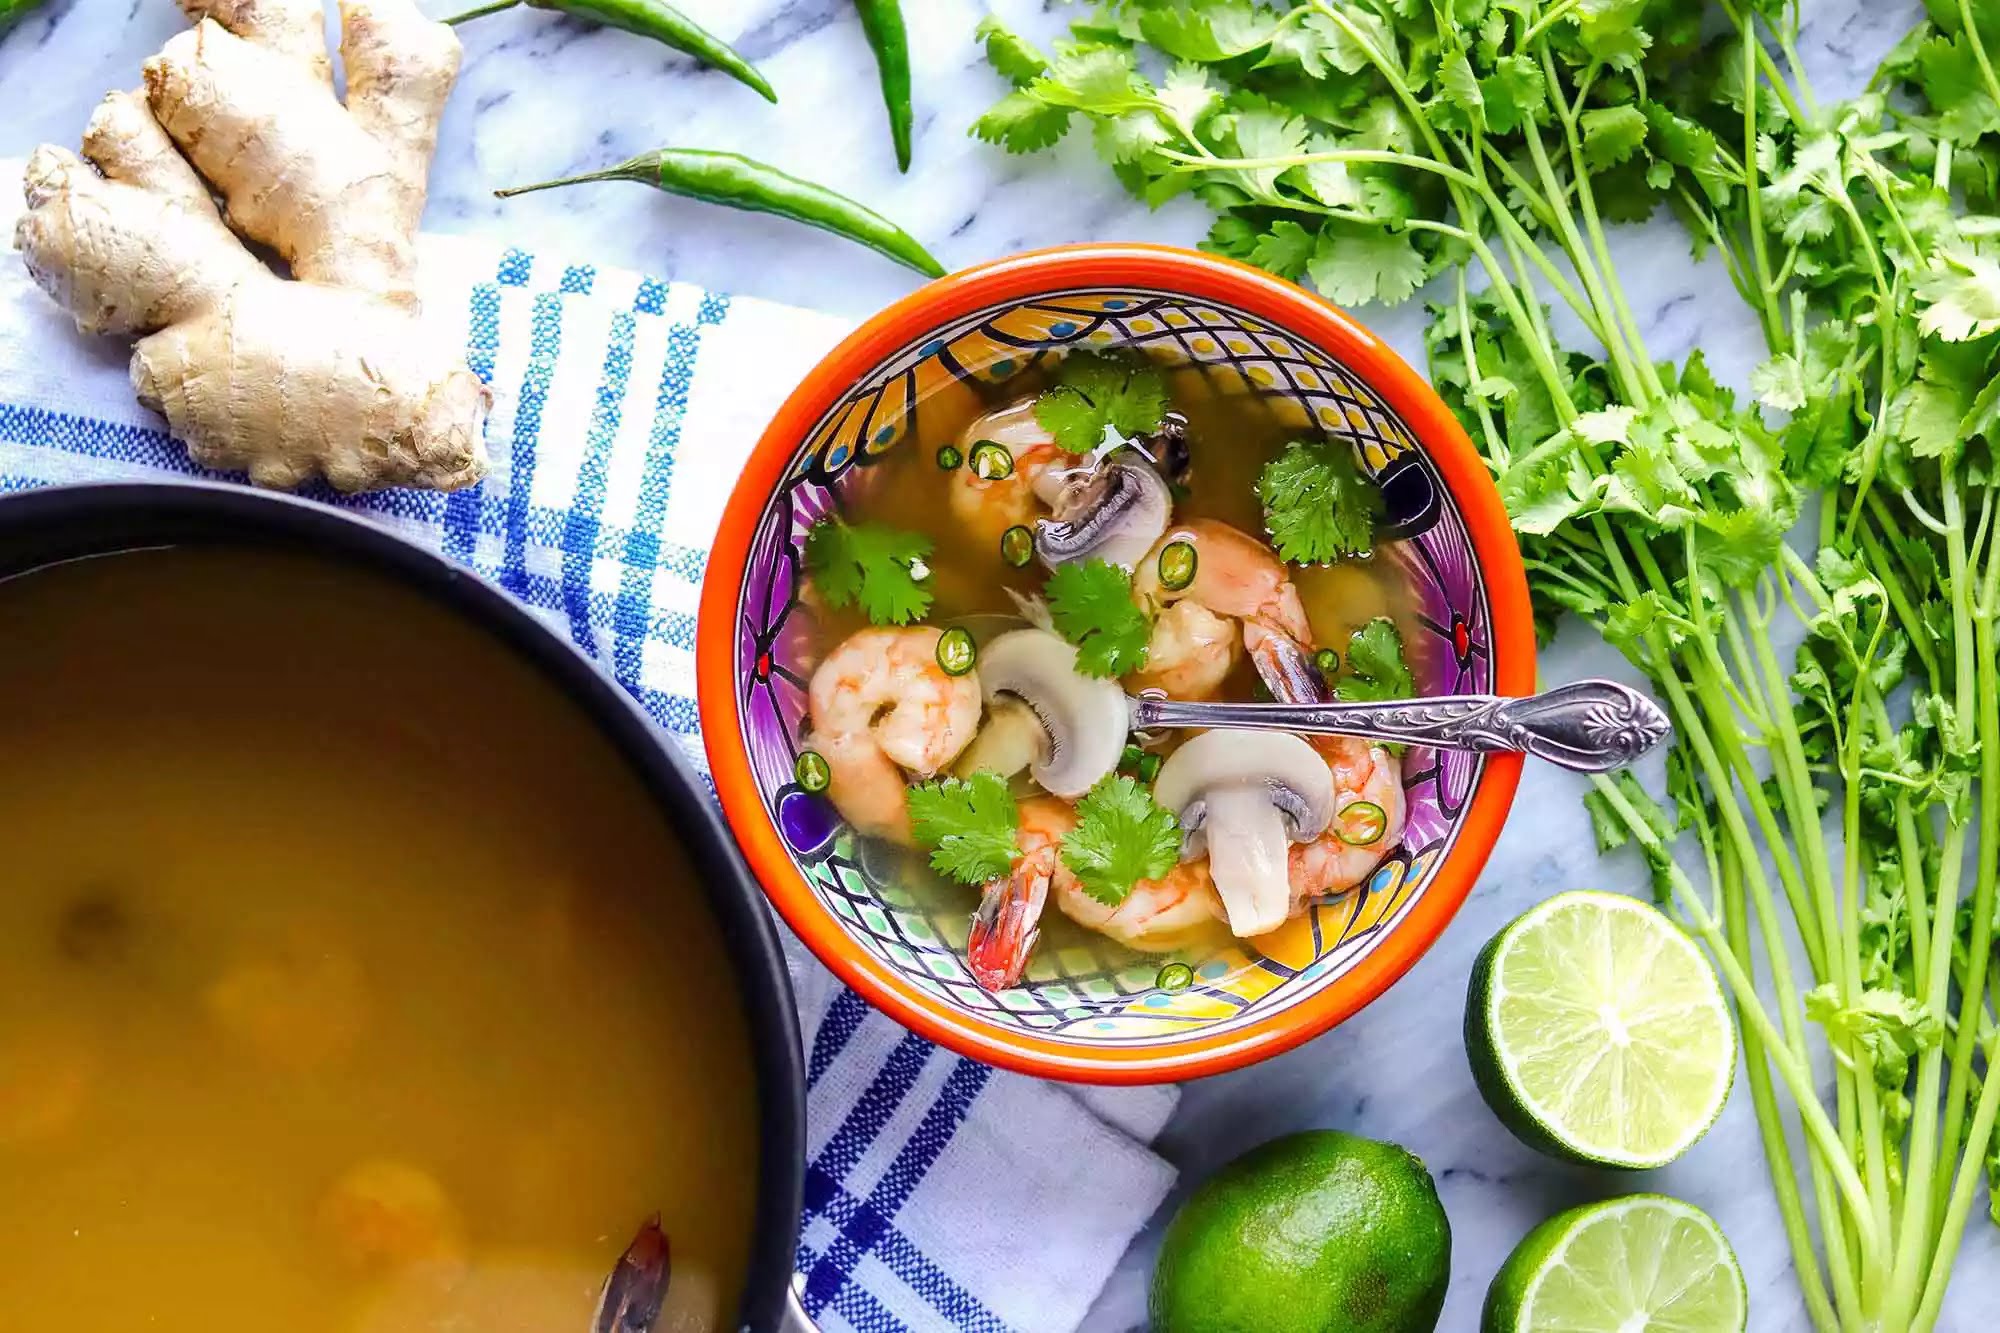 Том Ям Суп (Острый тайский суп с креветками)